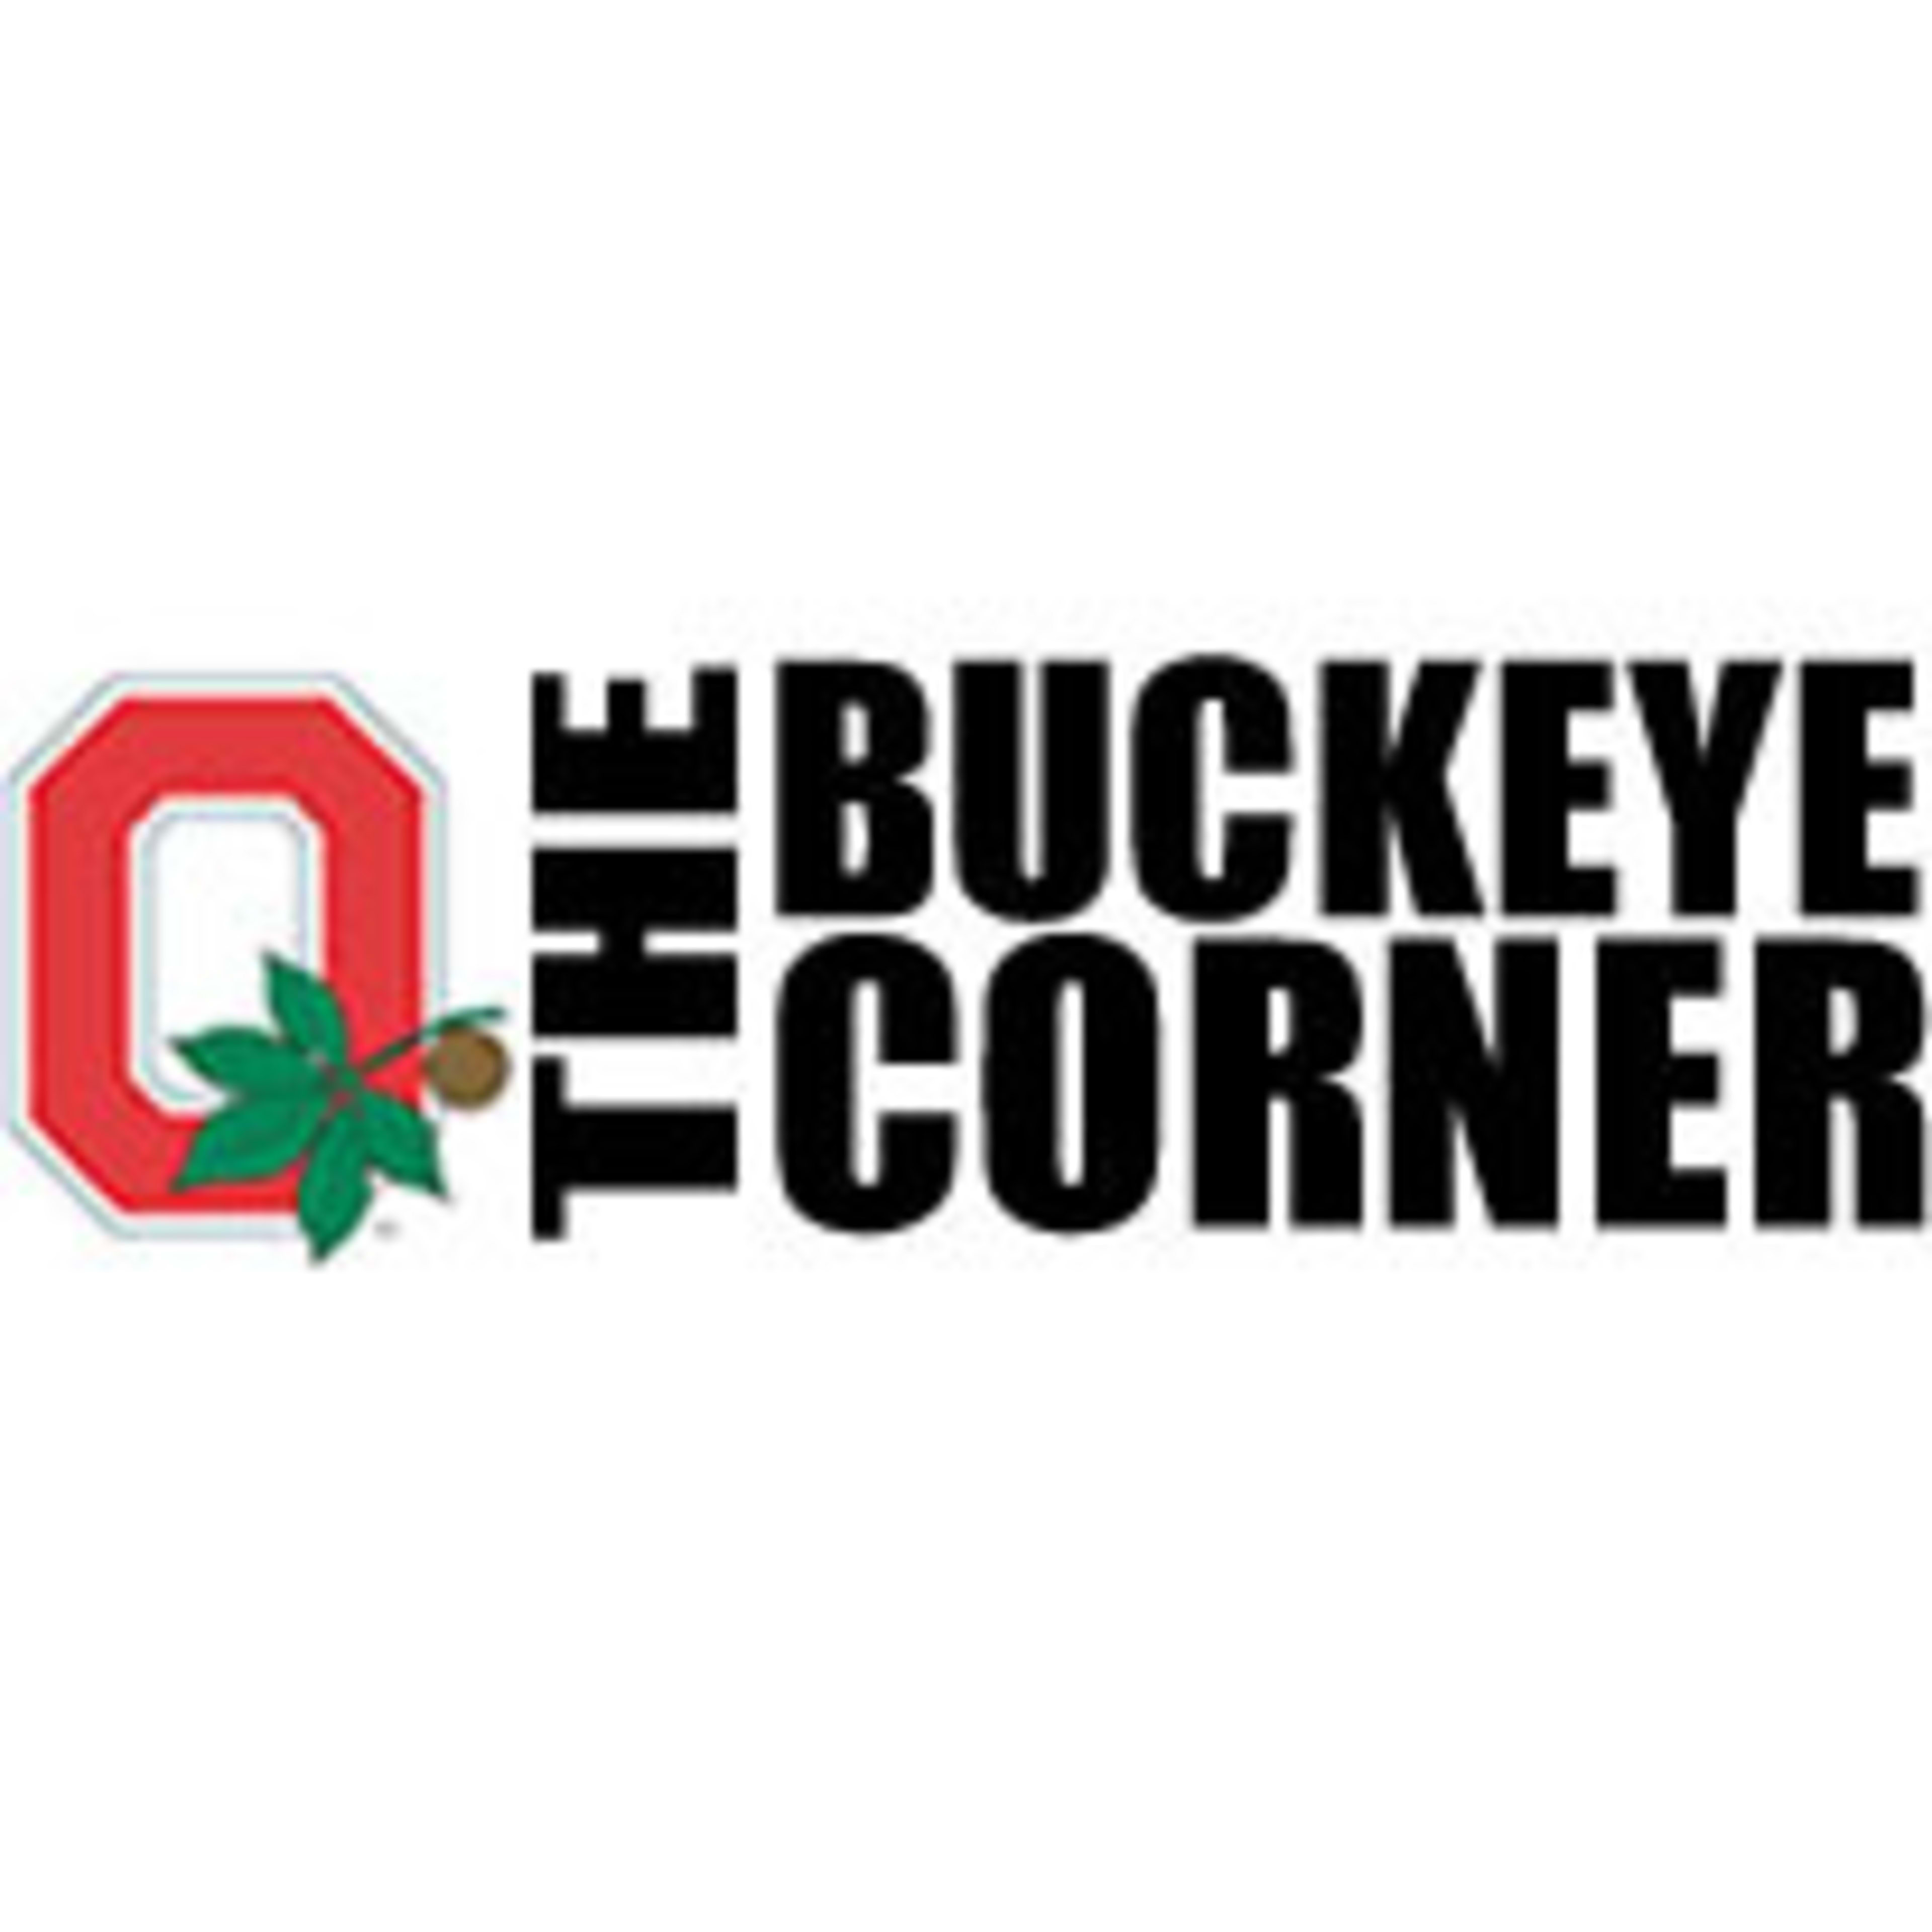 The Buckeye CornerCode